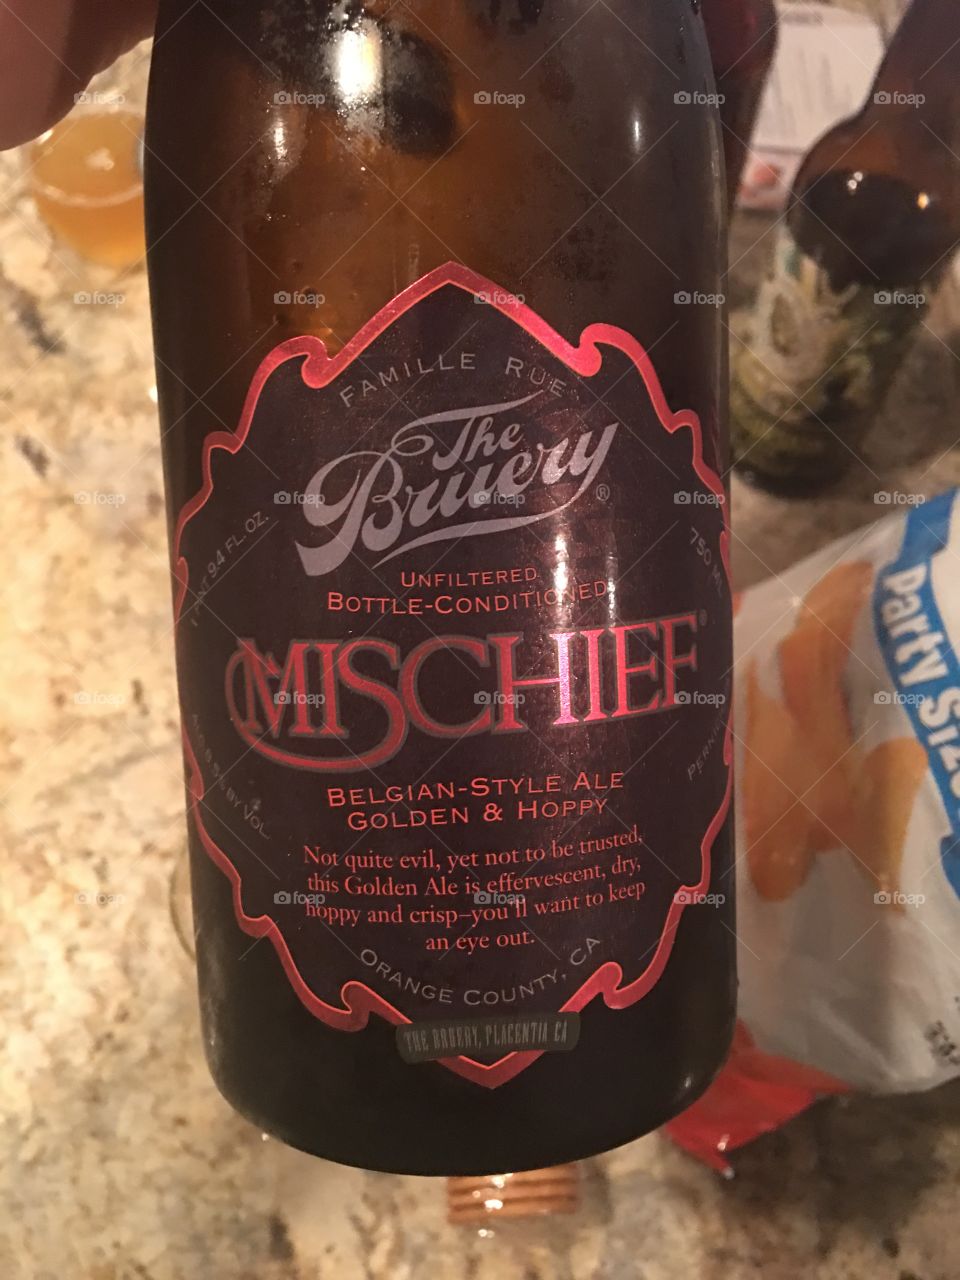 A bottle of craft beer